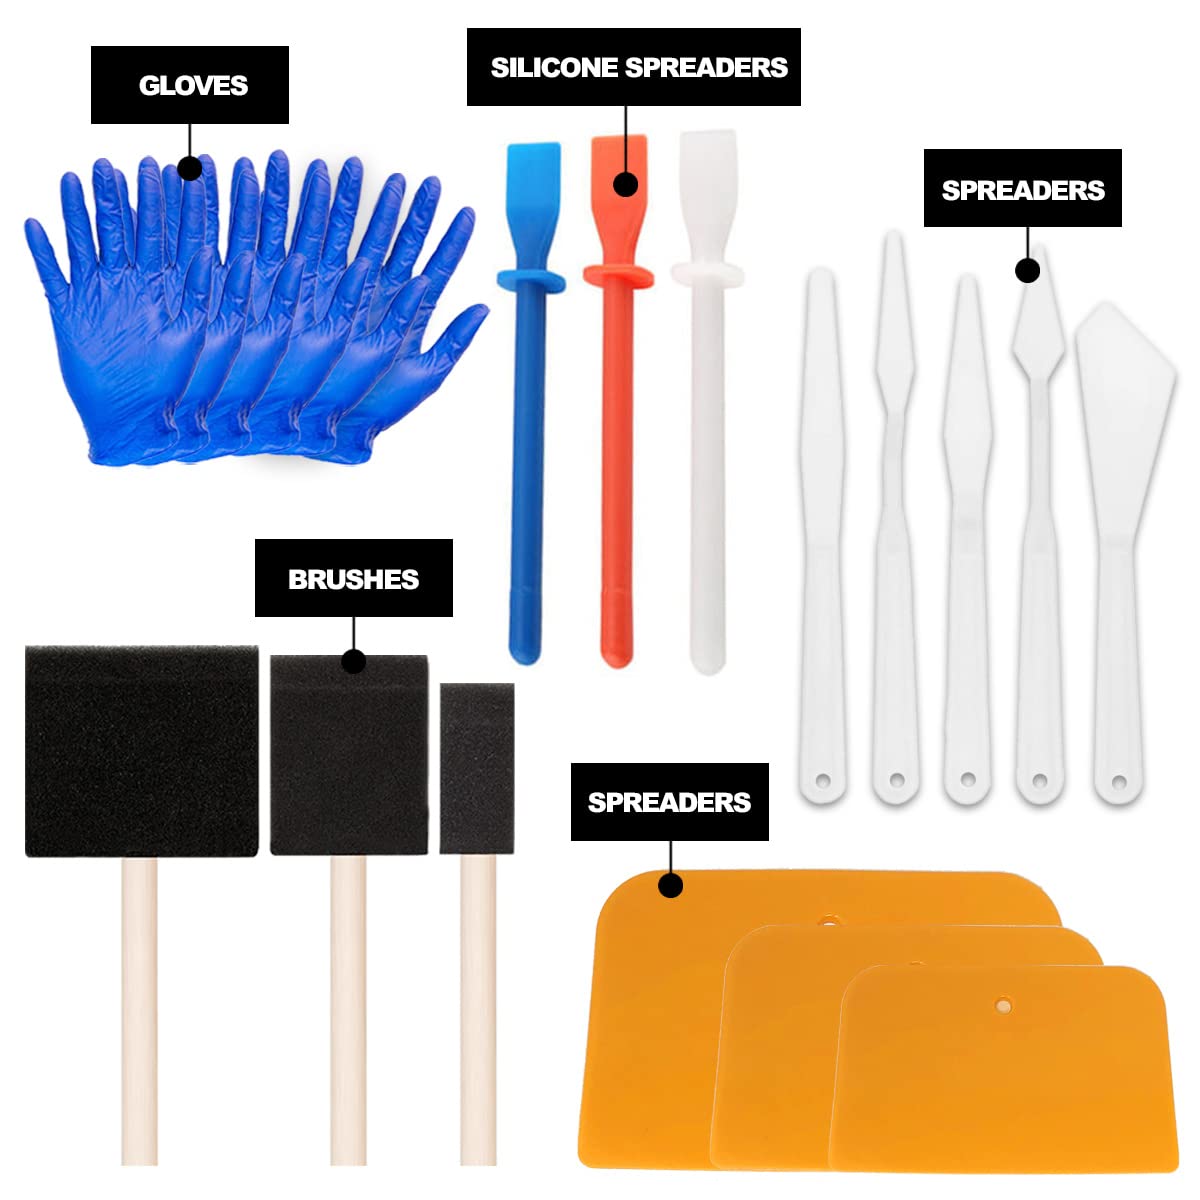 Mega Silver Glitter Mod Podge, Pixiss Accessory Kit with Glue Spreaders, Gloves, Brushes, Palette Knife Set